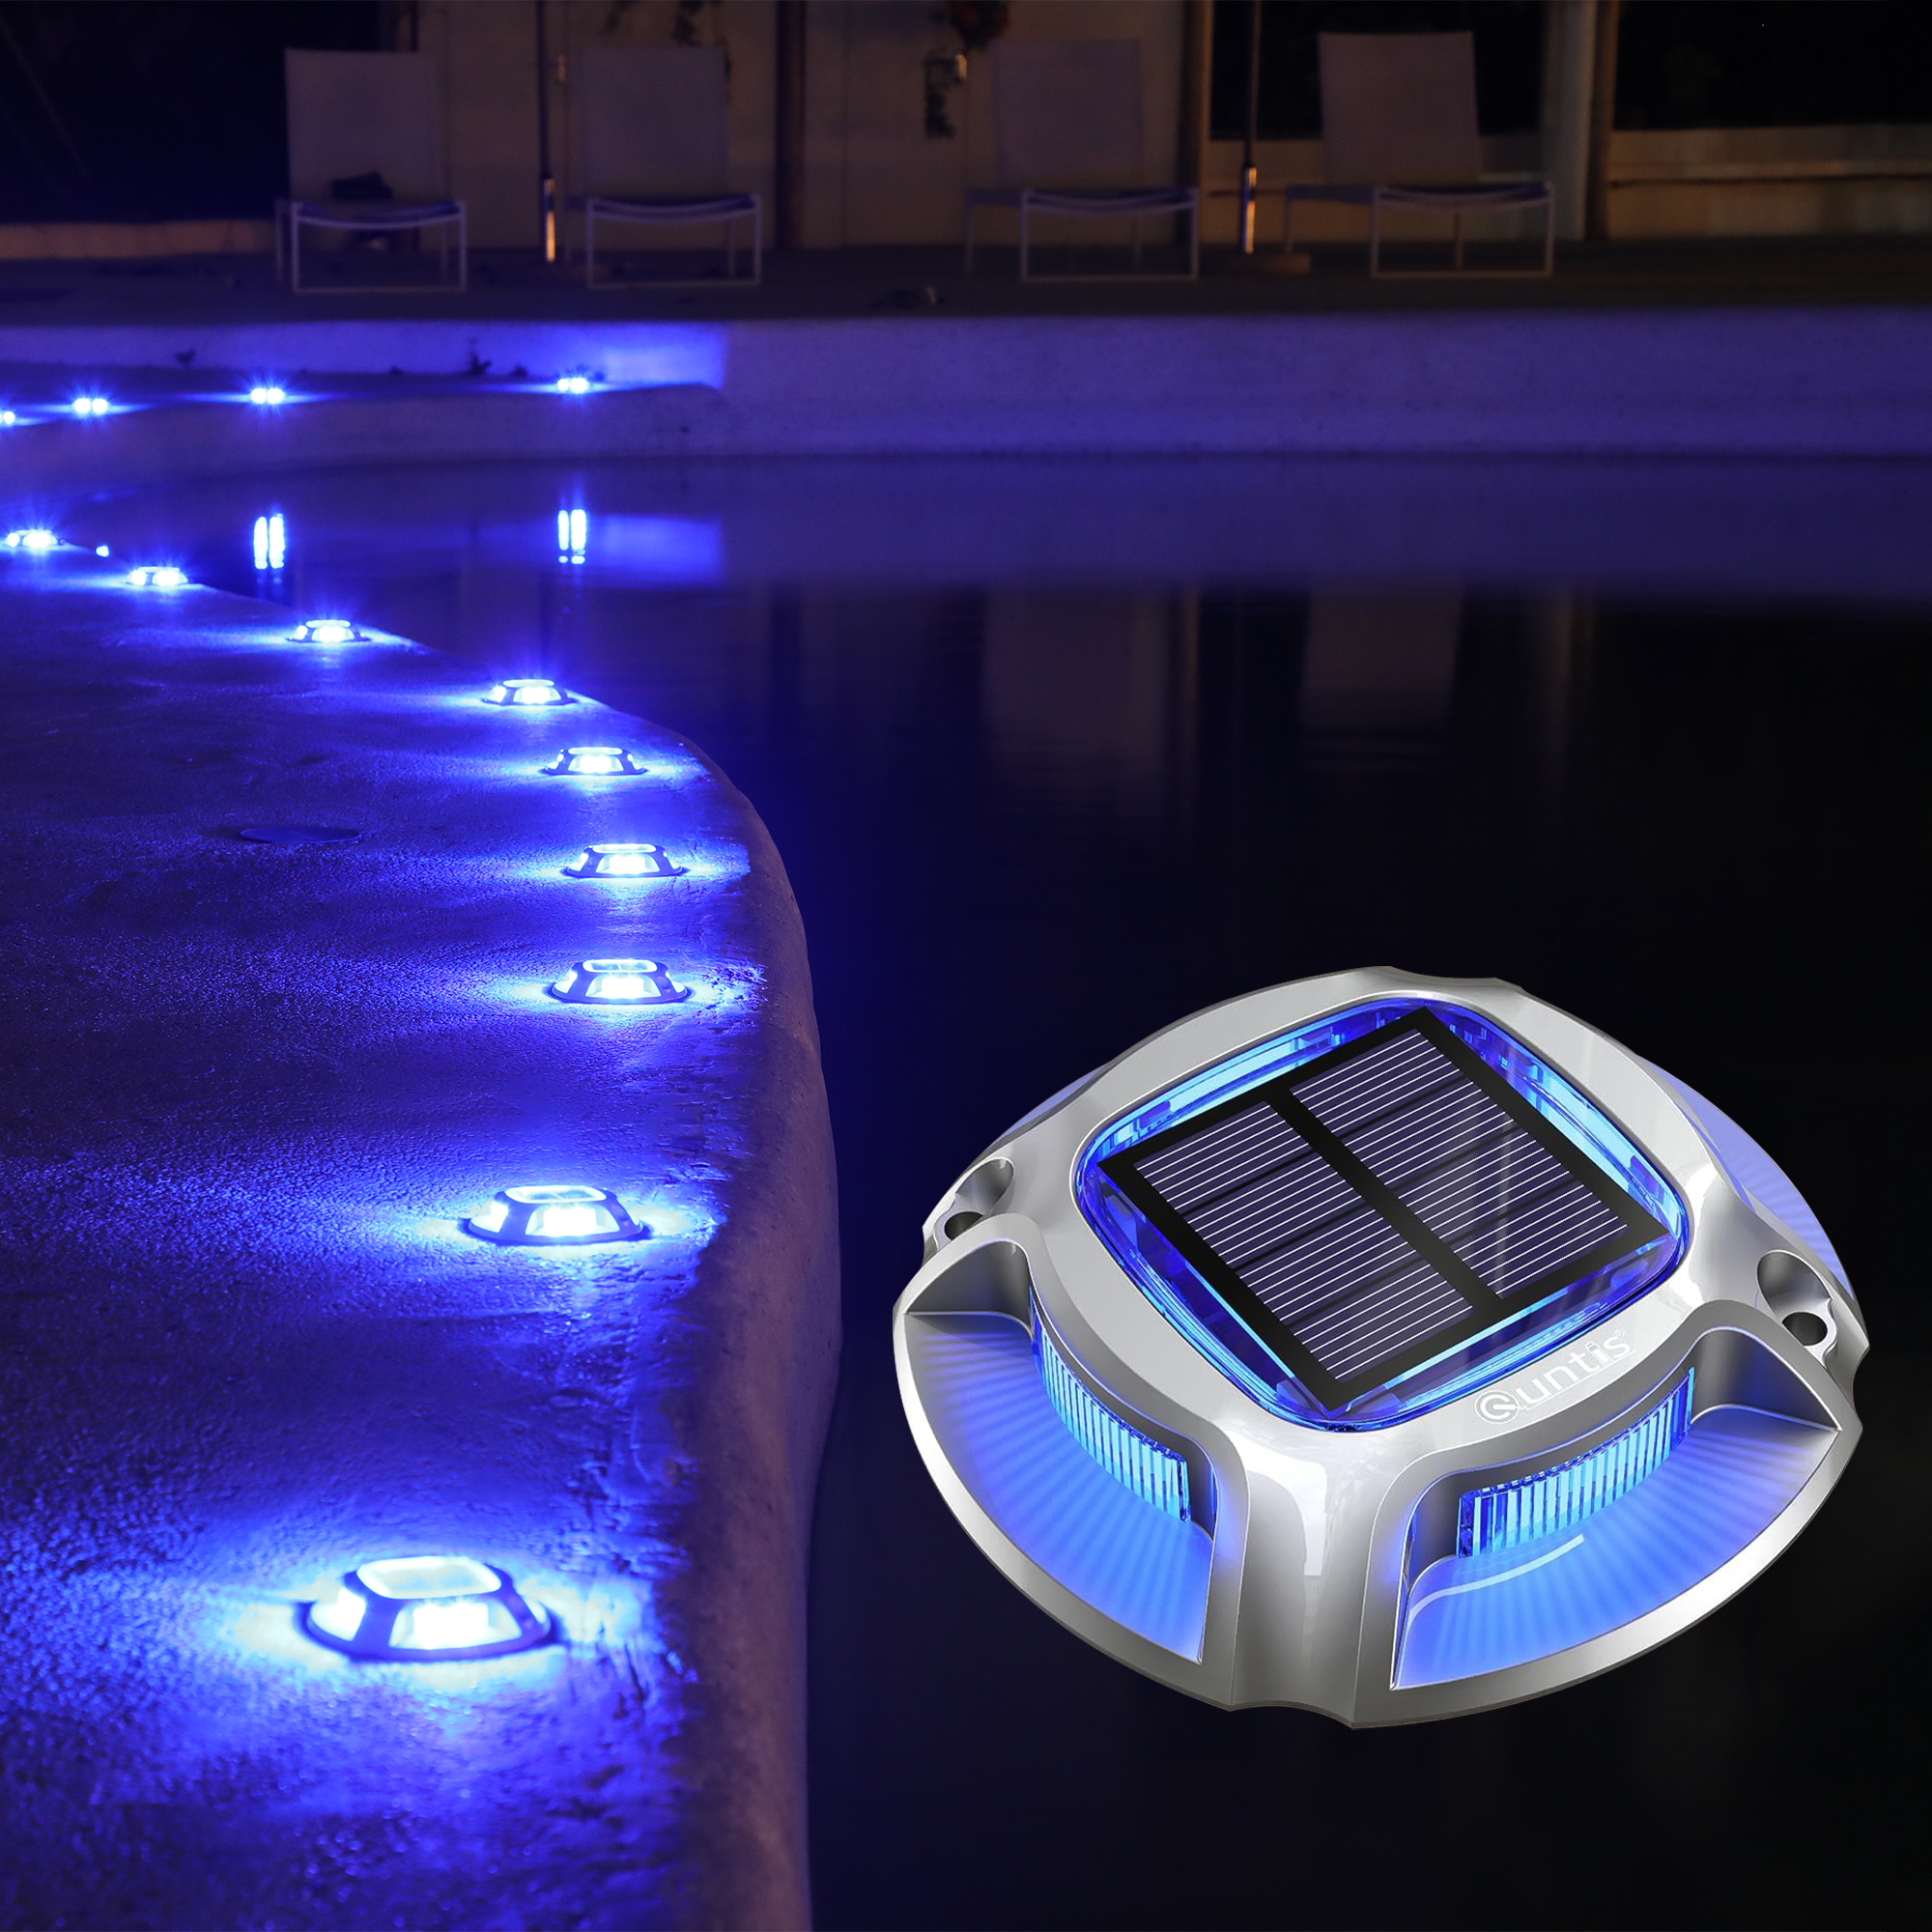 Solar Deck Lights 2 Colors in 1 Design for Decorative Illumination